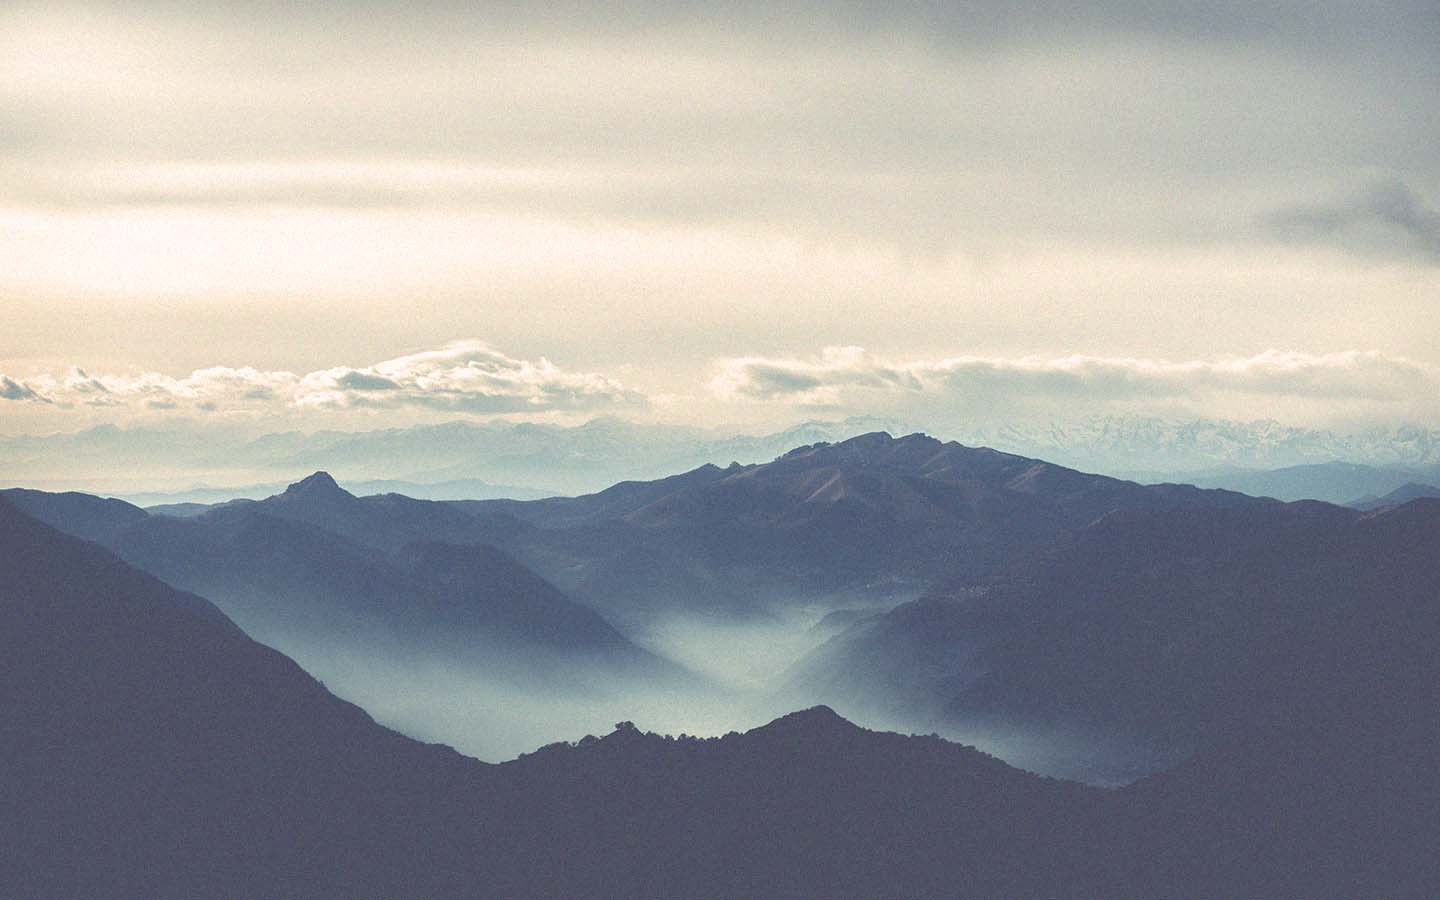 Foggy mountain peaks